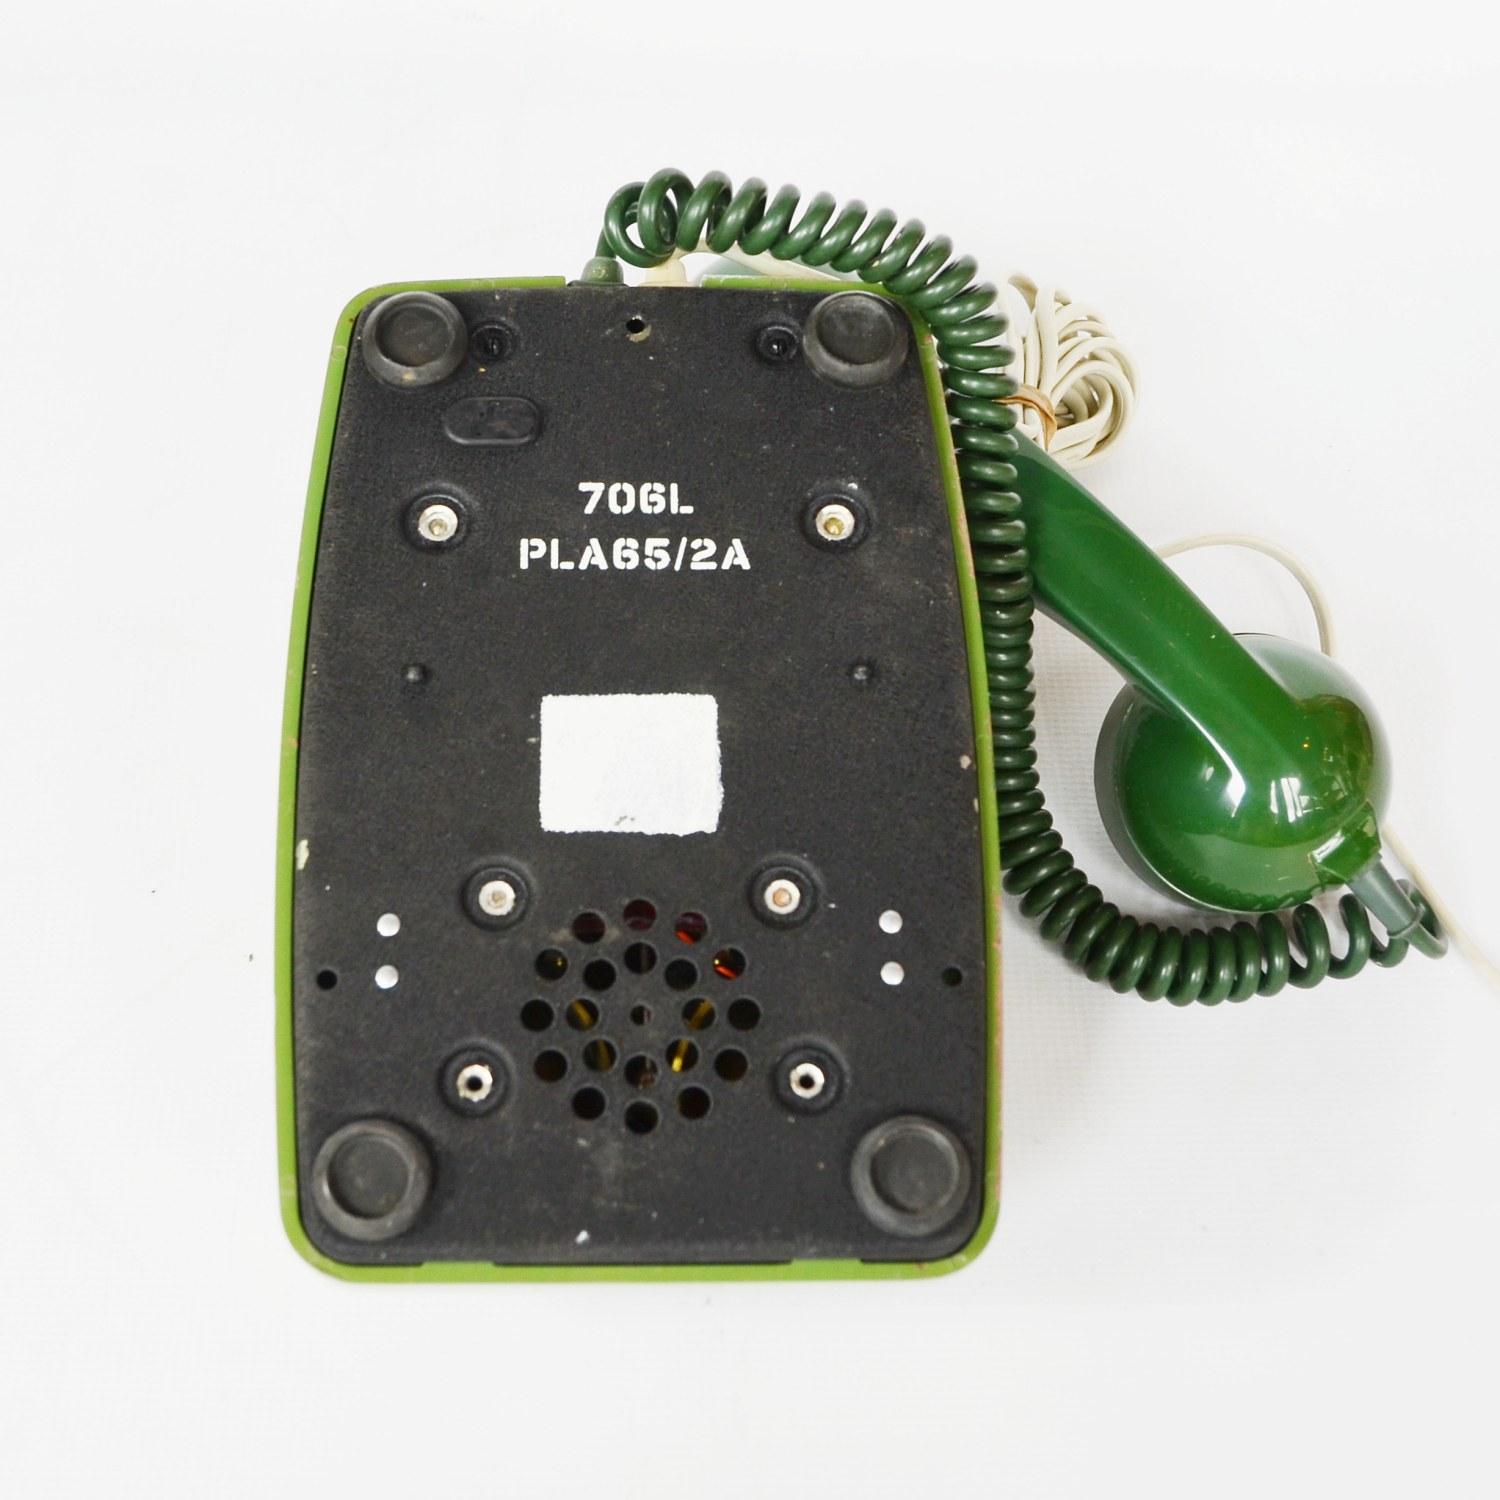 Plastic Original GPO Model 706L Telephone Full Working Order